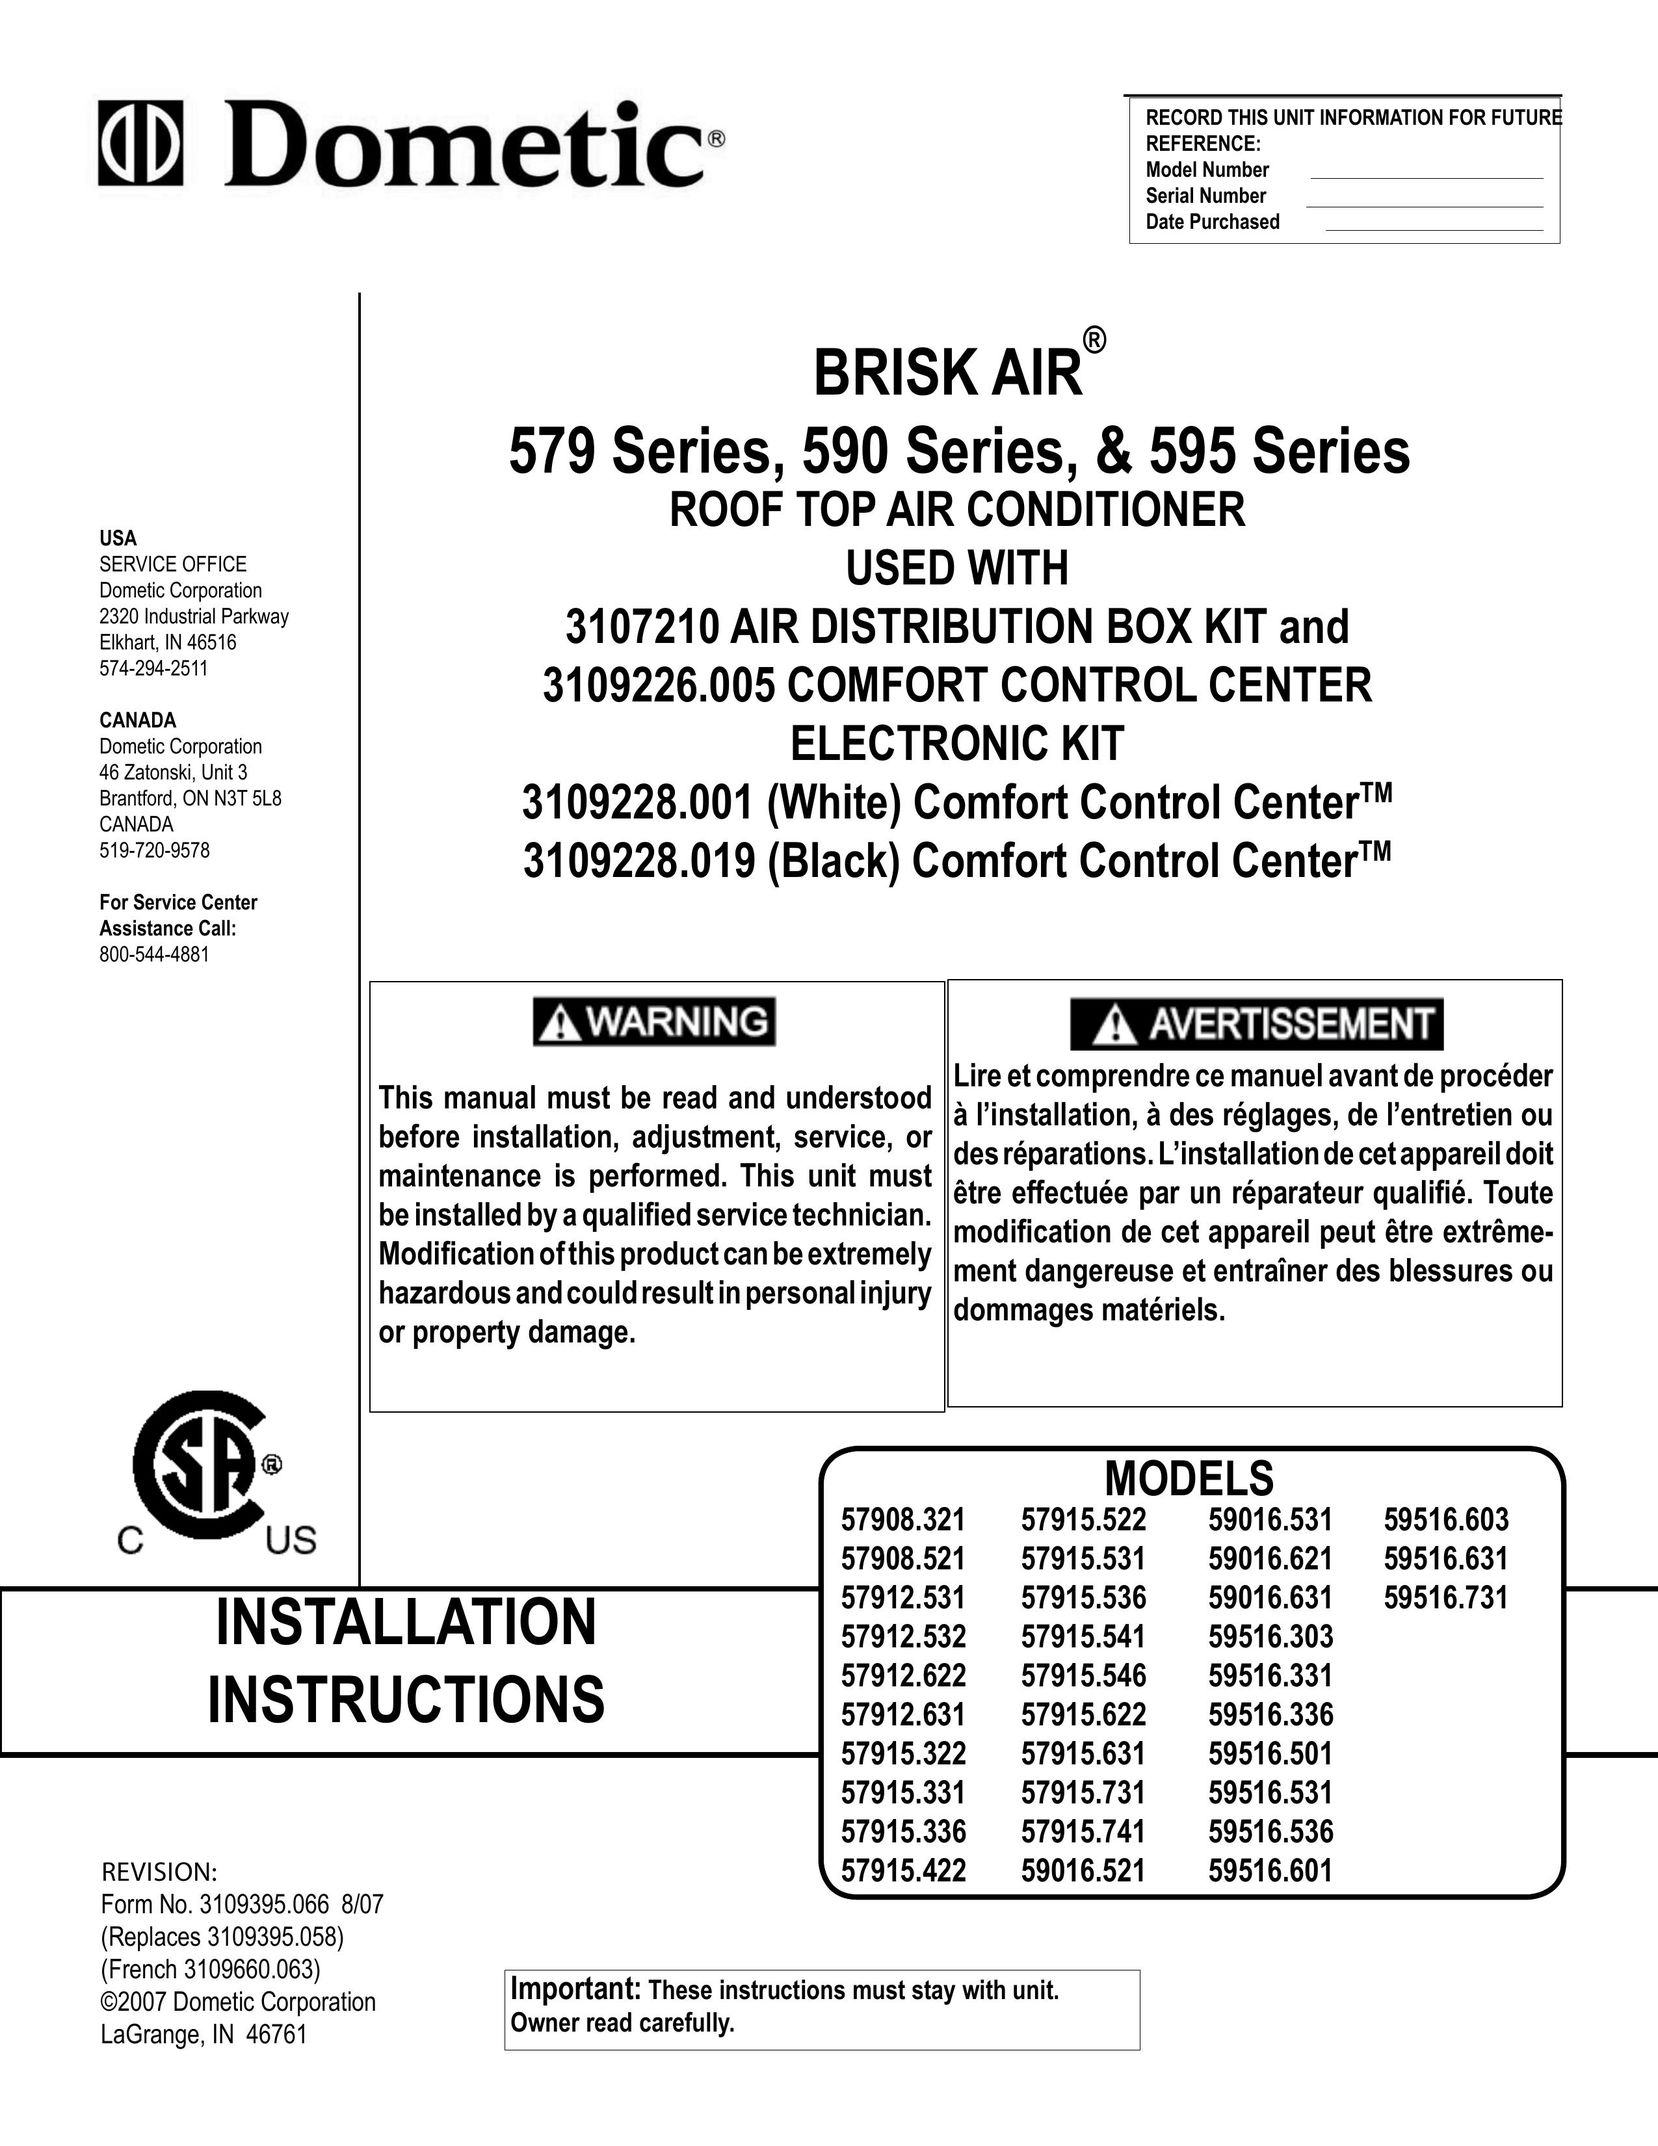 Dometic 579 SERIES Air Conditioner User Manual